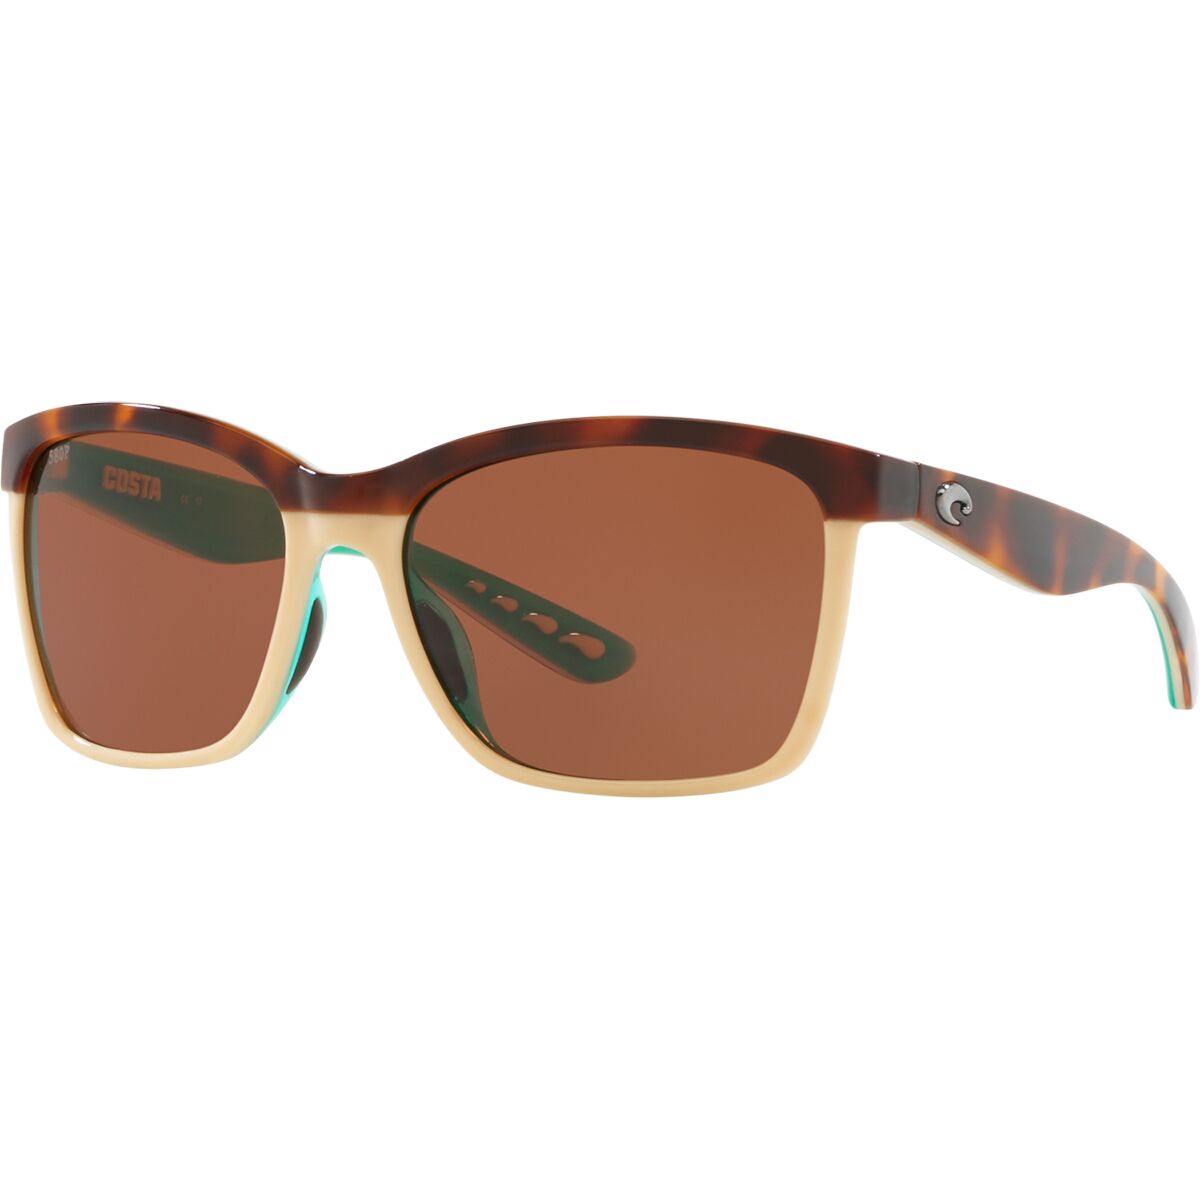 Costa Anaa 580P Polarized Sunglasses